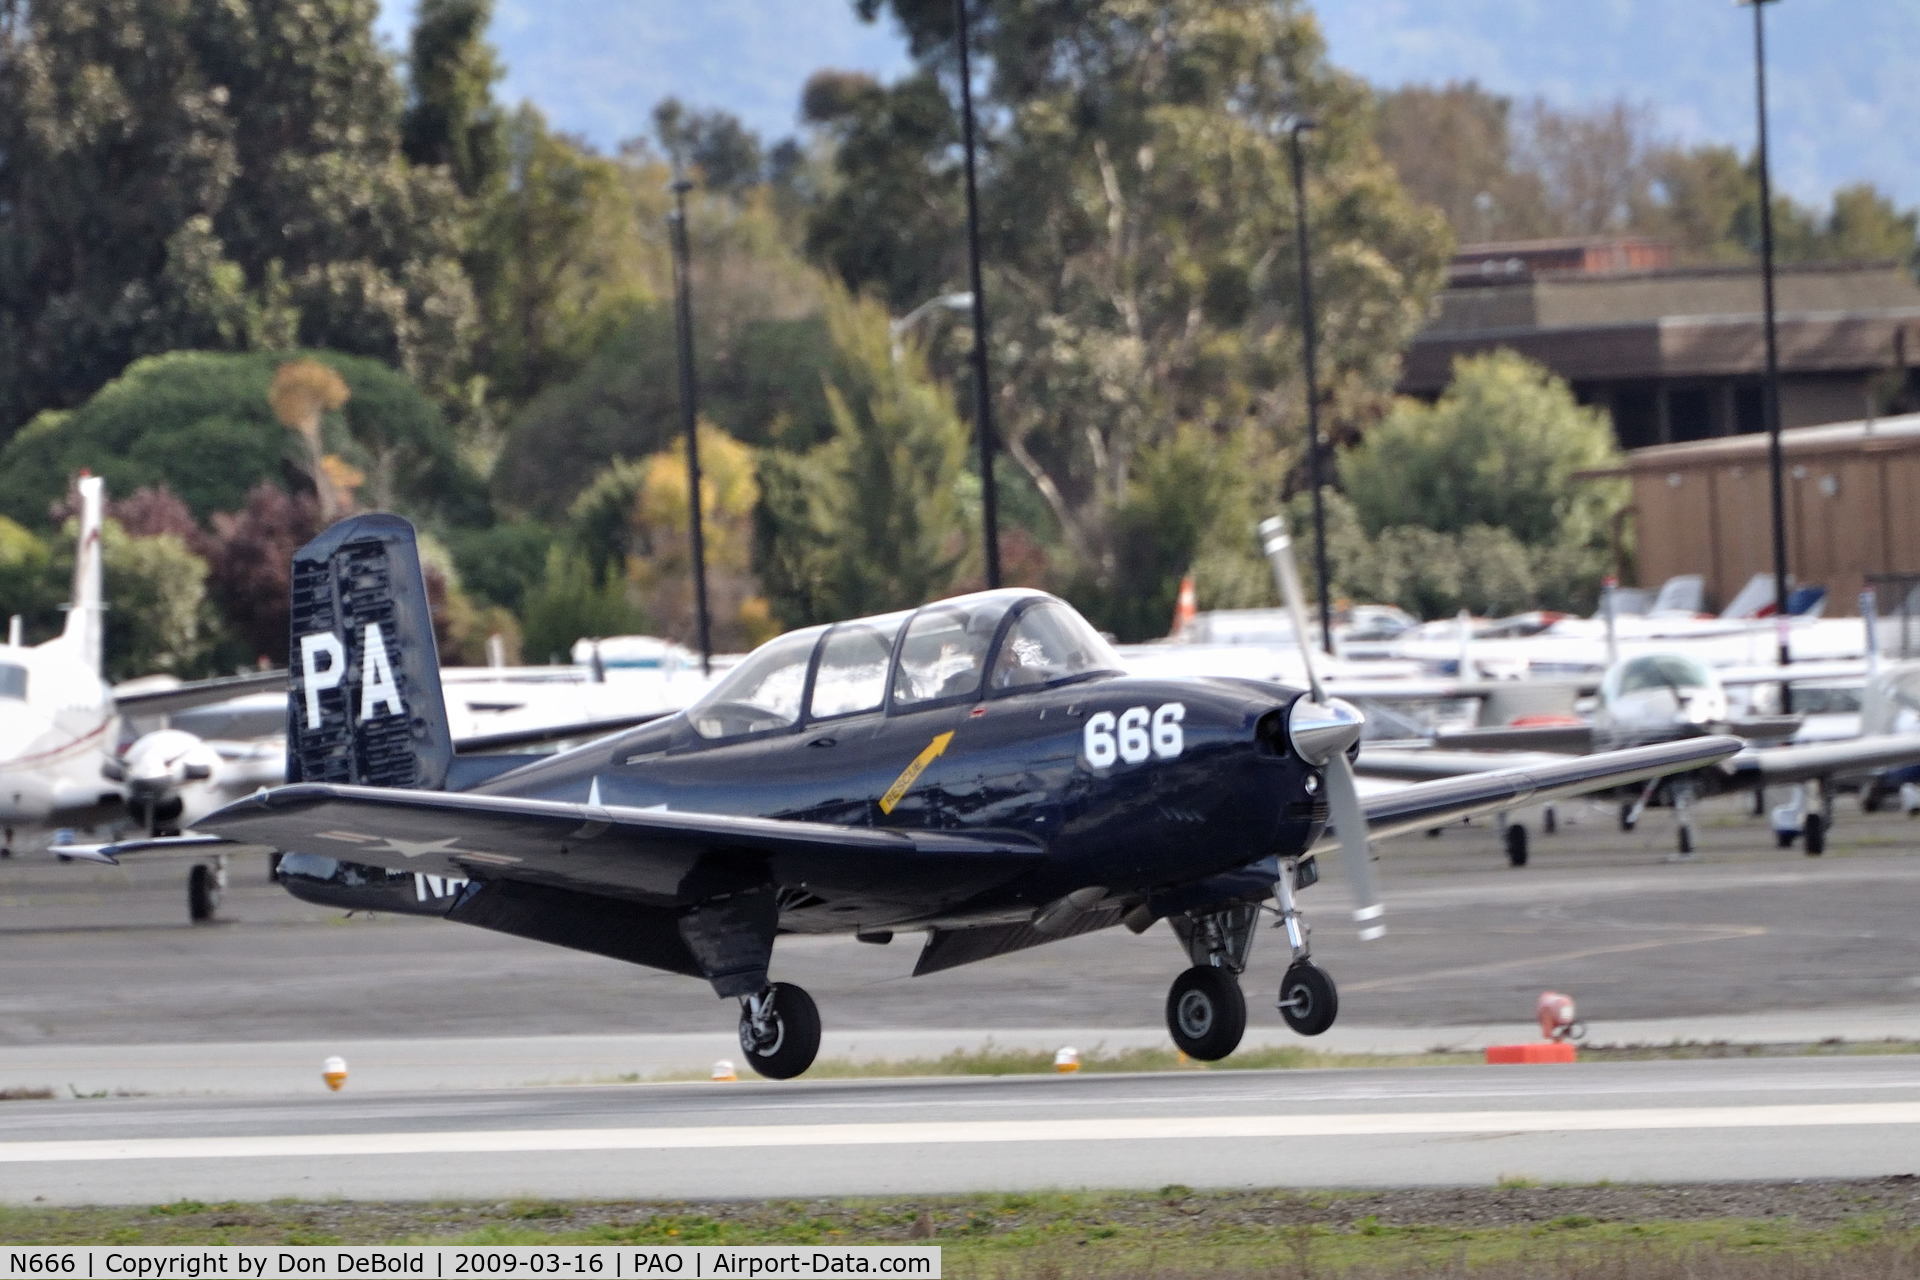 N666, 1958 Beech A45 C/N GM-141, N666 landing at the Palo Alto Airport